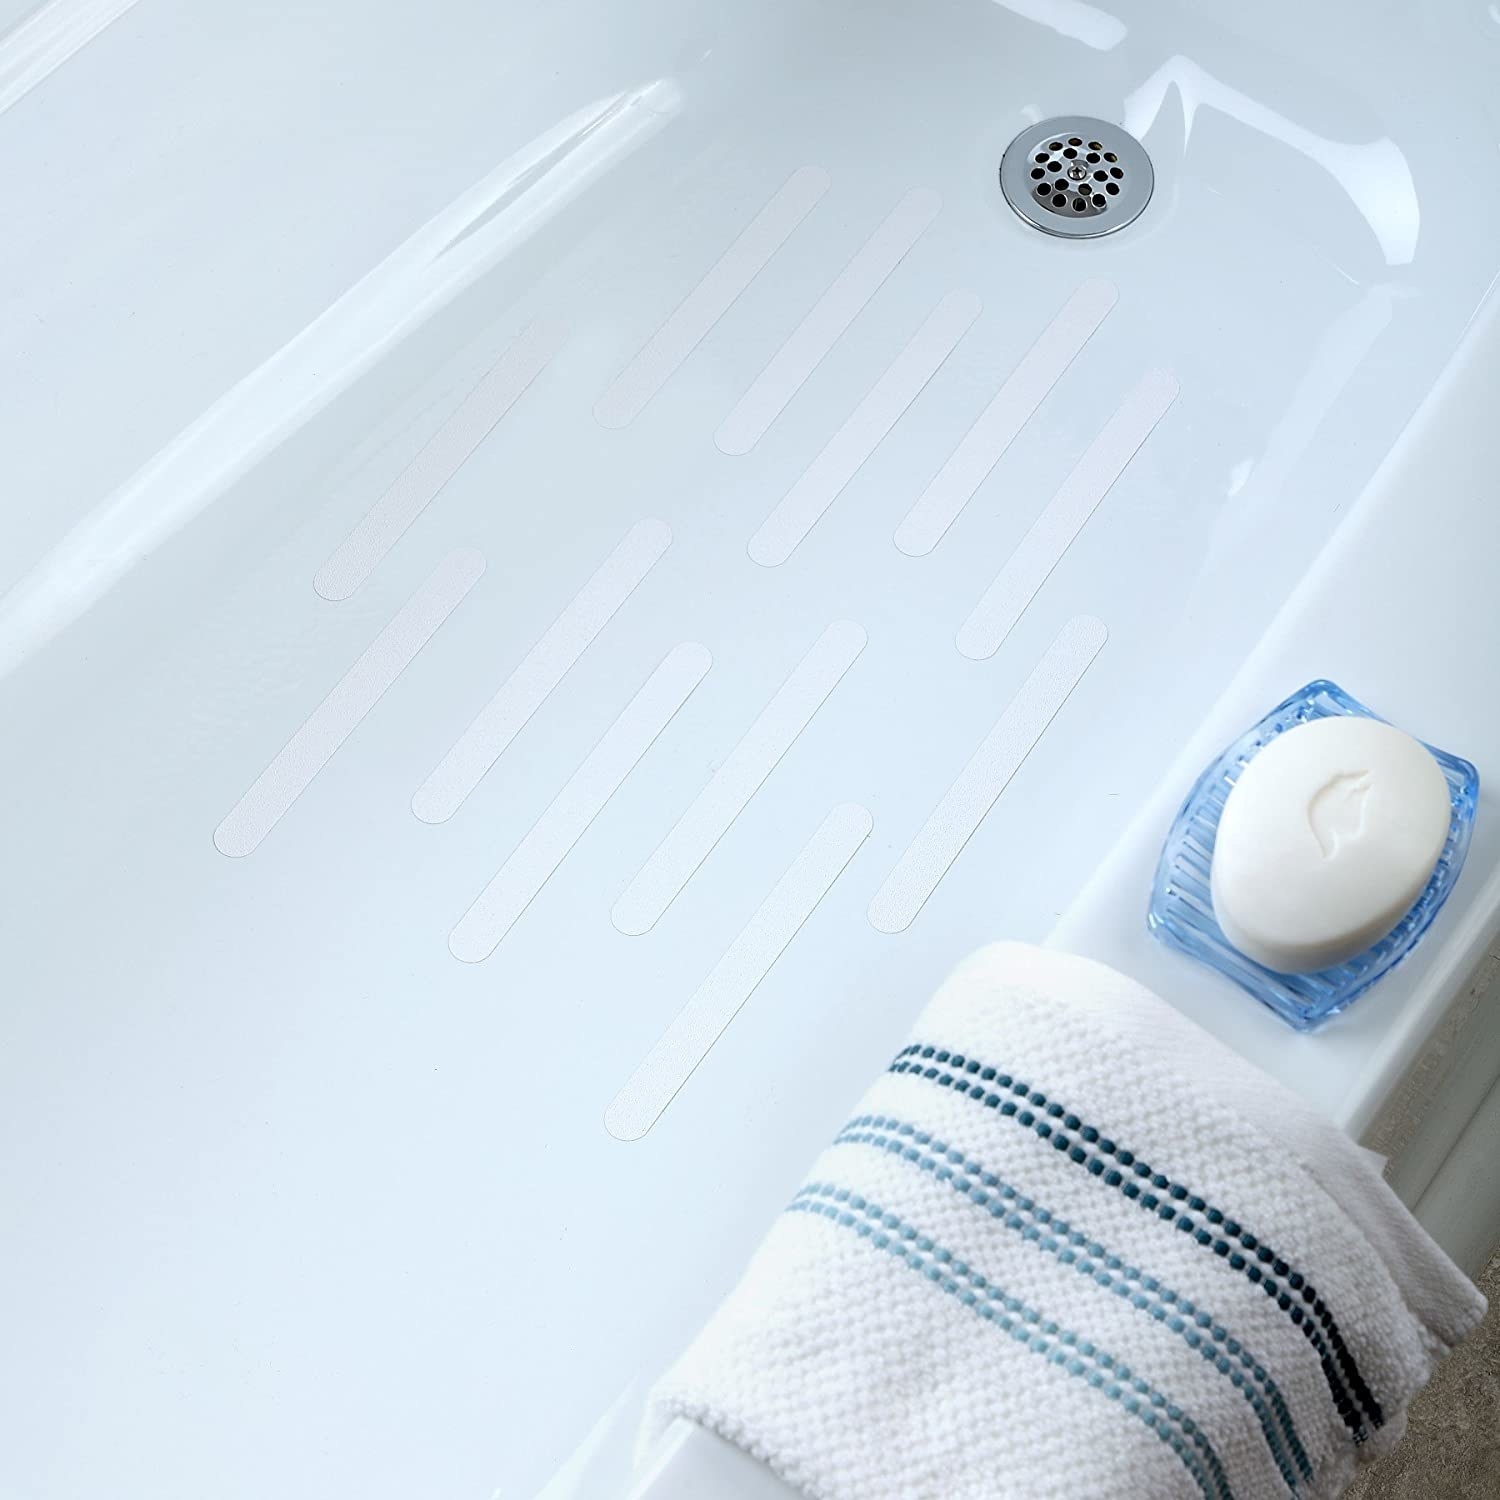 The tub stickers on the bottom of a bathtub